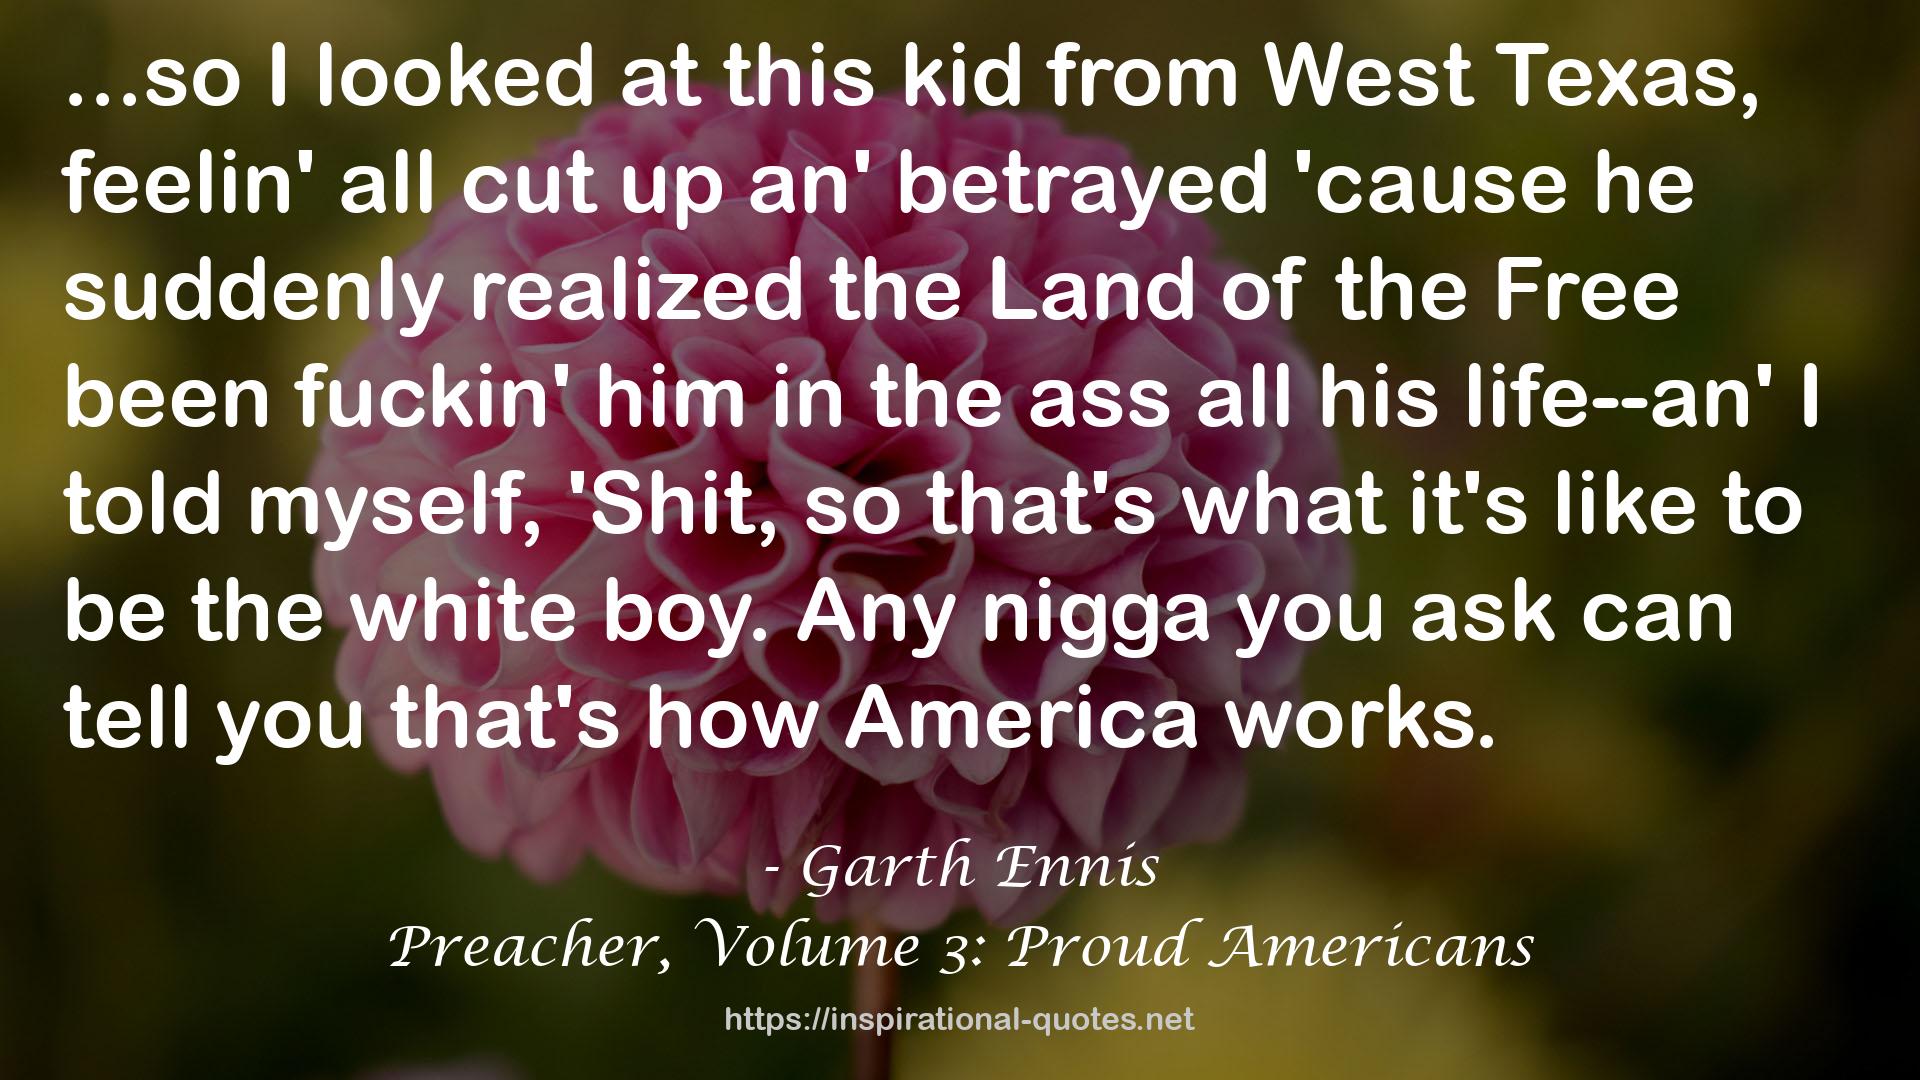 Preacher, Volume 3: Proud Americans QUOTES